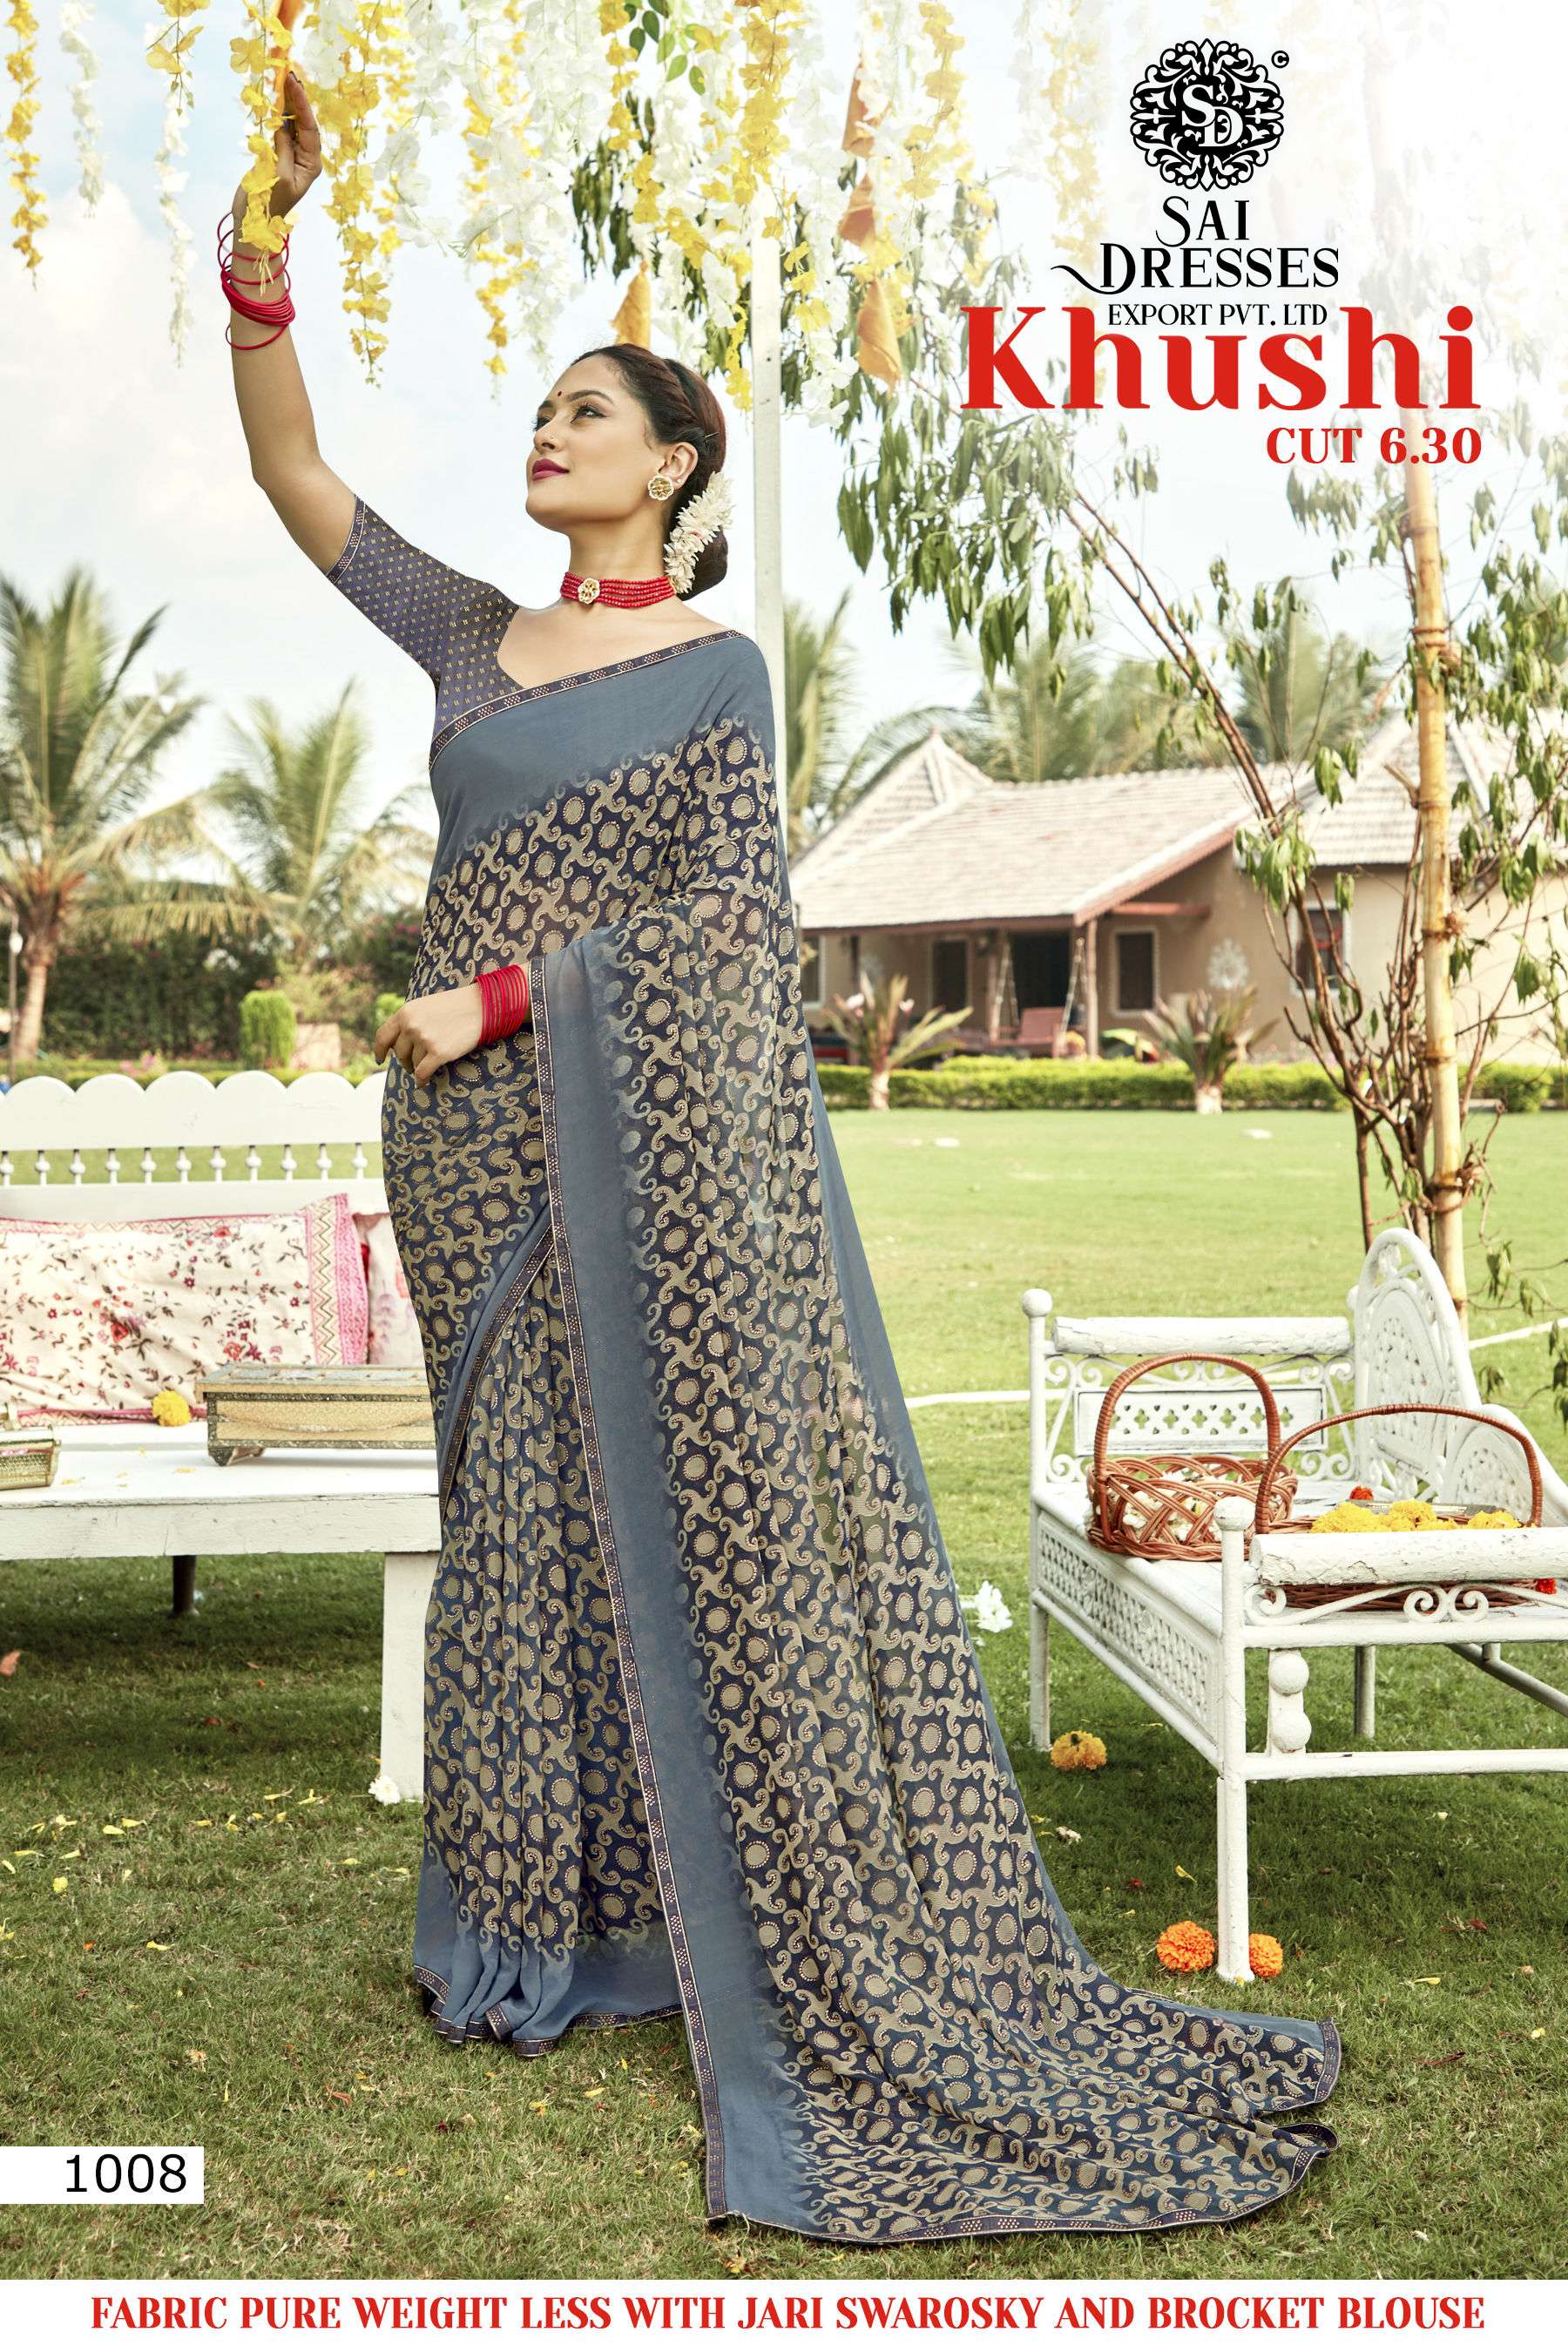 Khushi Lifestyle Cotton Lycra Sassy Saree Shapewear, Mid, Model  Name/Number: Shapper Waer at Rs 290/piece in Surat